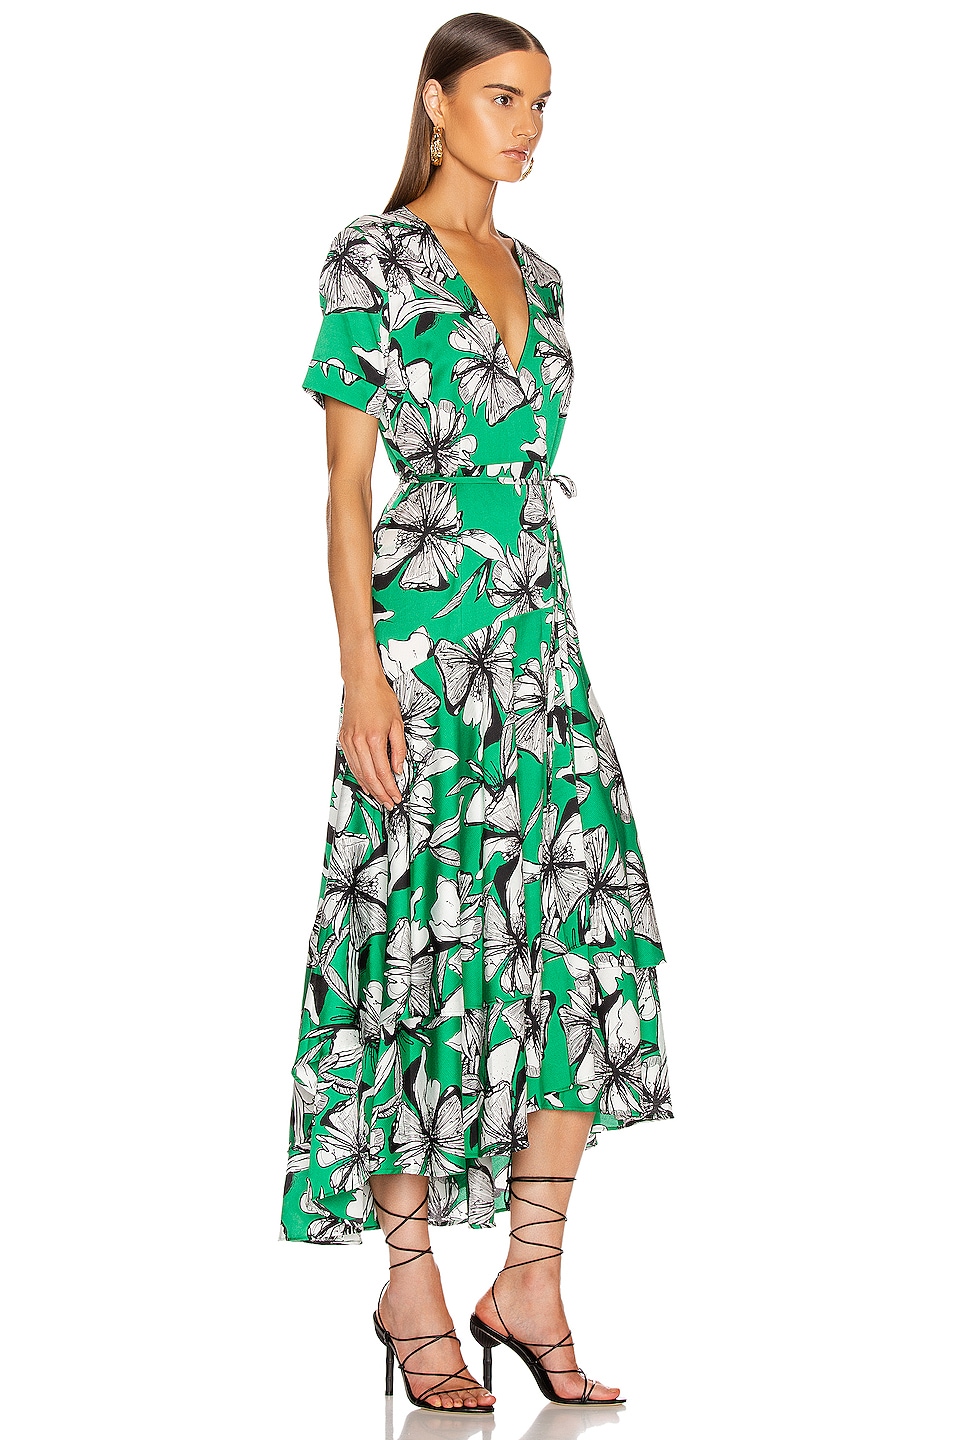 Alexis Deanna Dress in Emerald Floral | FWRD